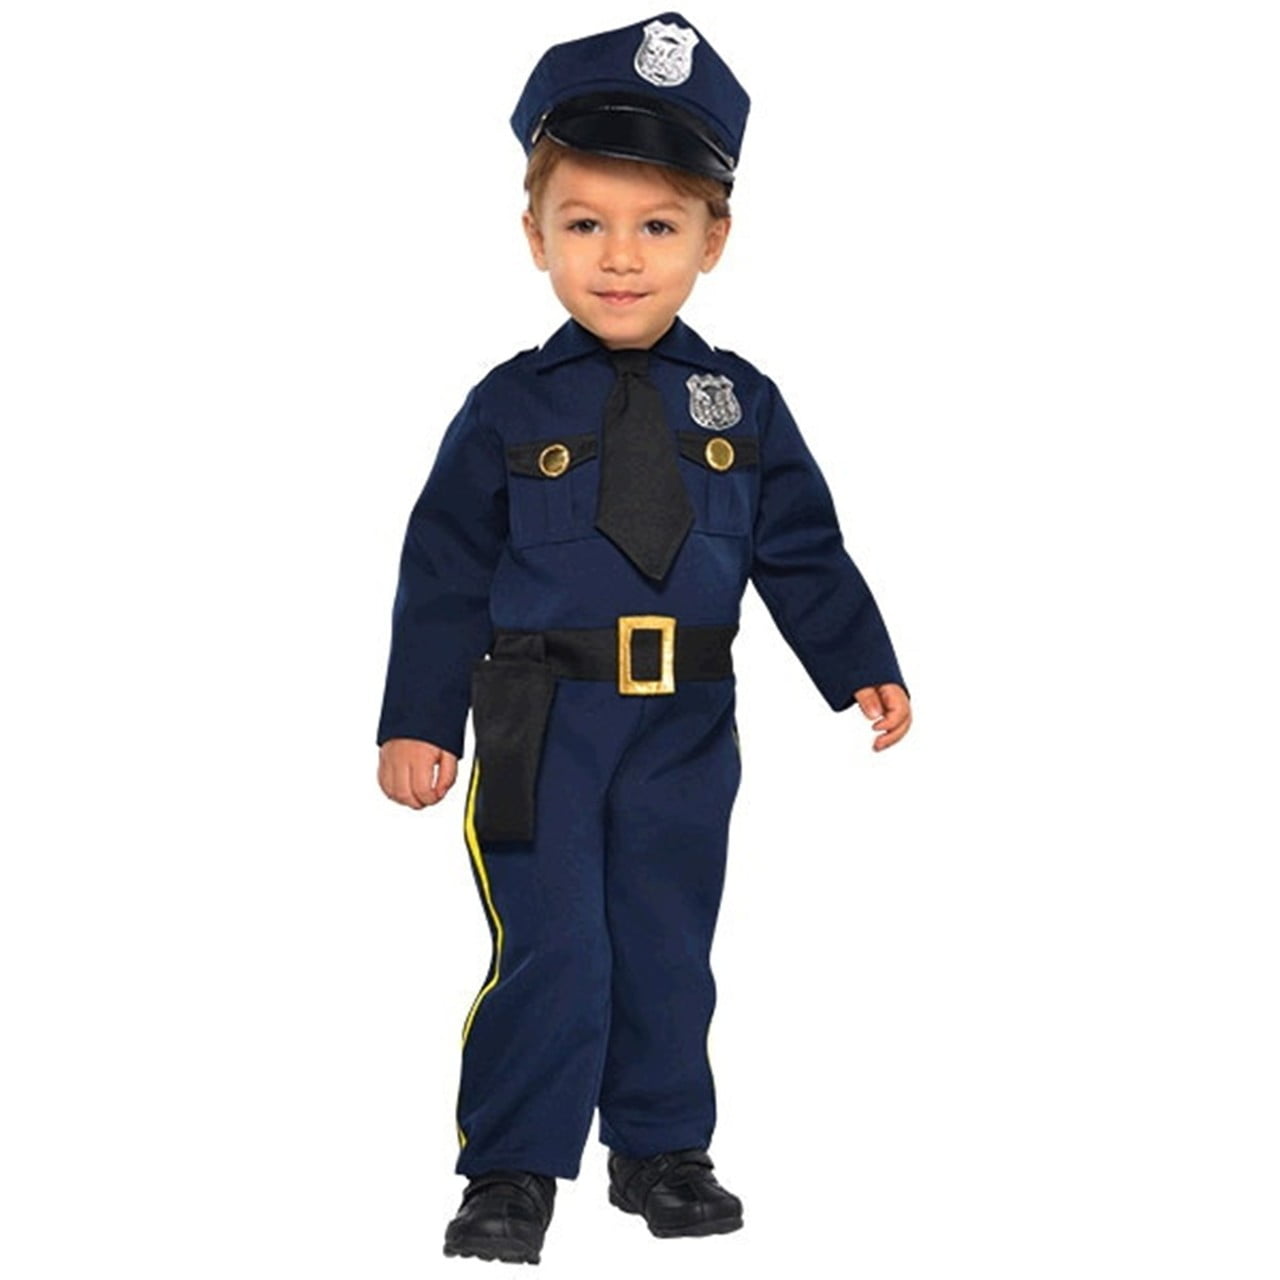 Police Officer Cop Recruit Costume Boys Infant 0-6 Months - Walmart.com